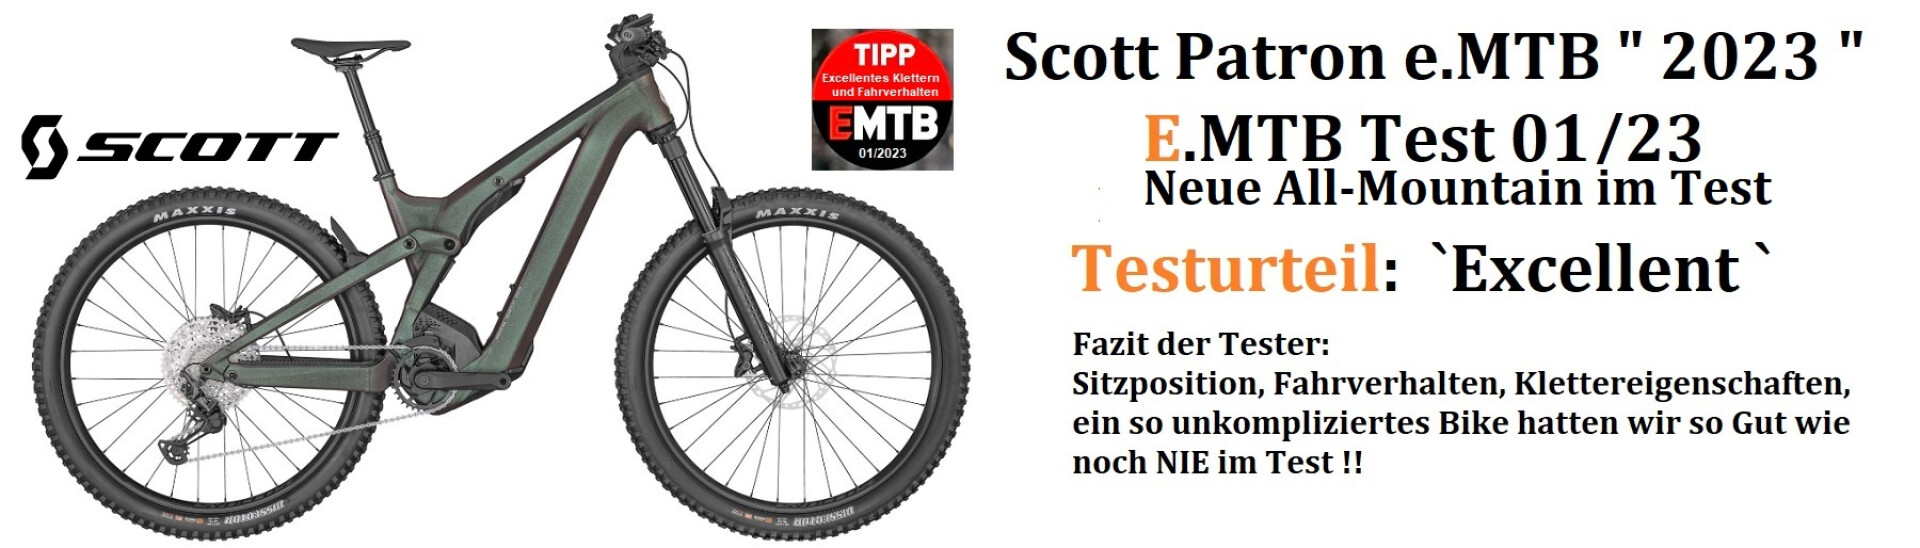 Scott Patron E.MTB Test